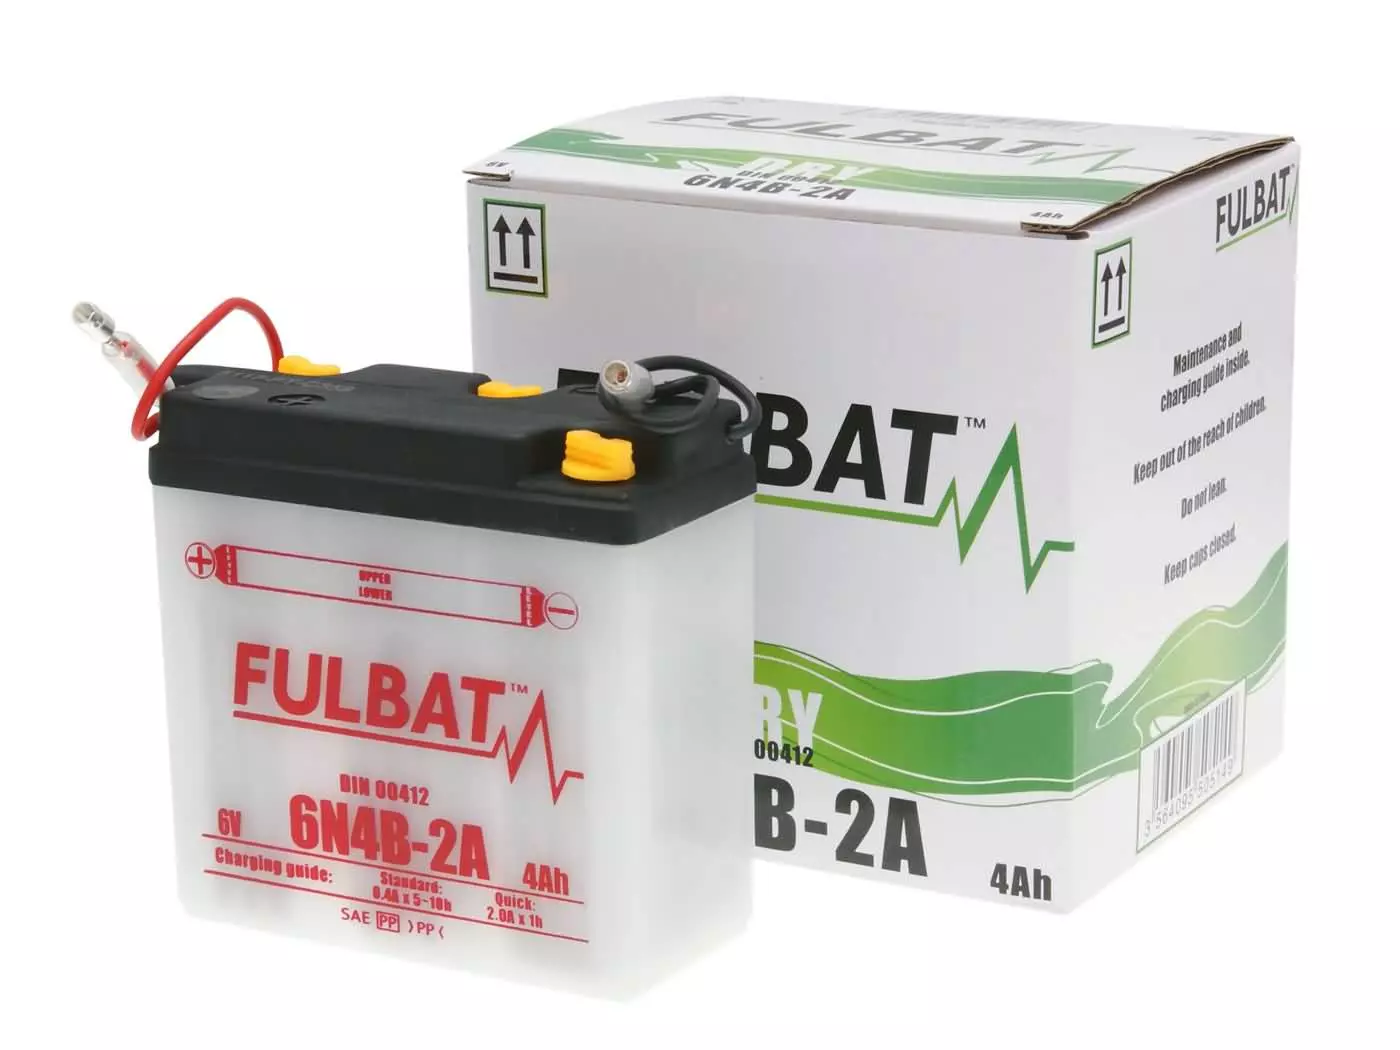 Battery Fulbat 6V 6N4B-2A DRY Incl. Acid Pack